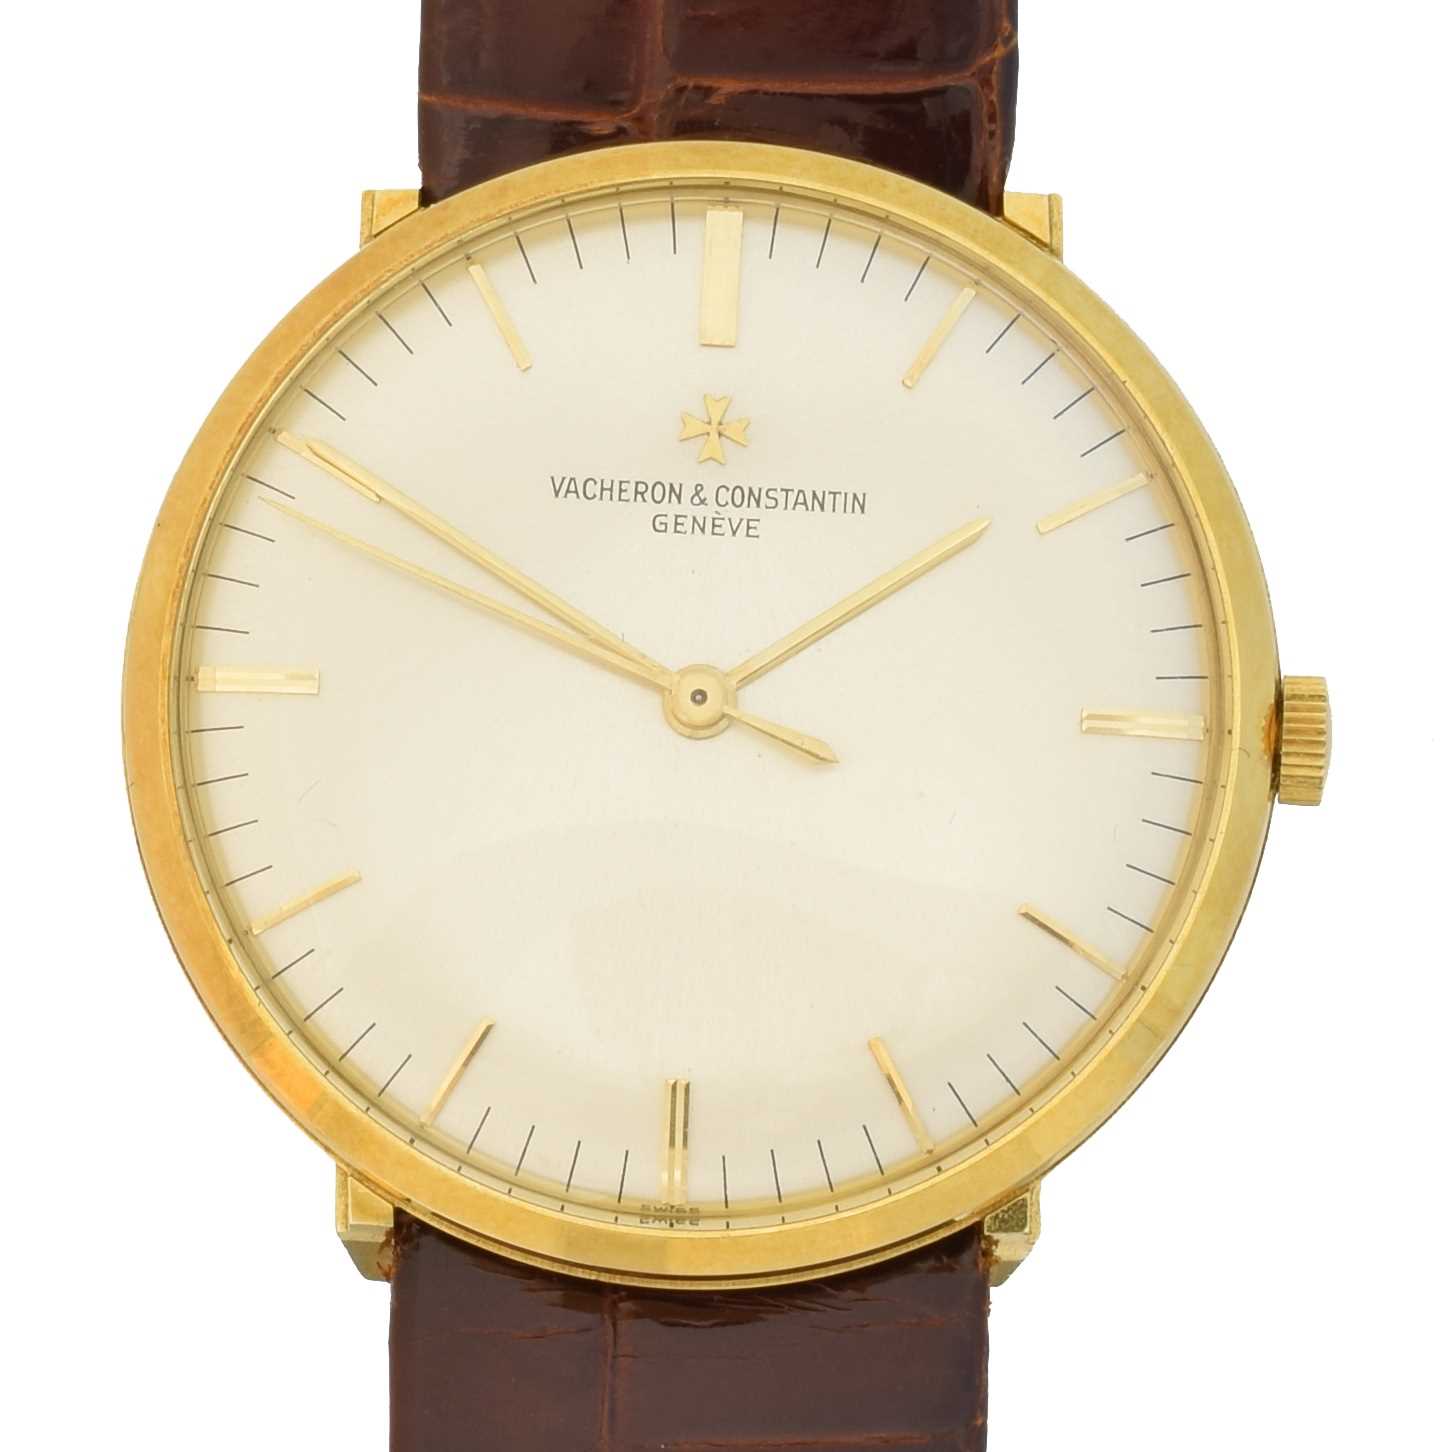 160 - A 1960s 18ct gold Vacheron & Constantin wristwatch,